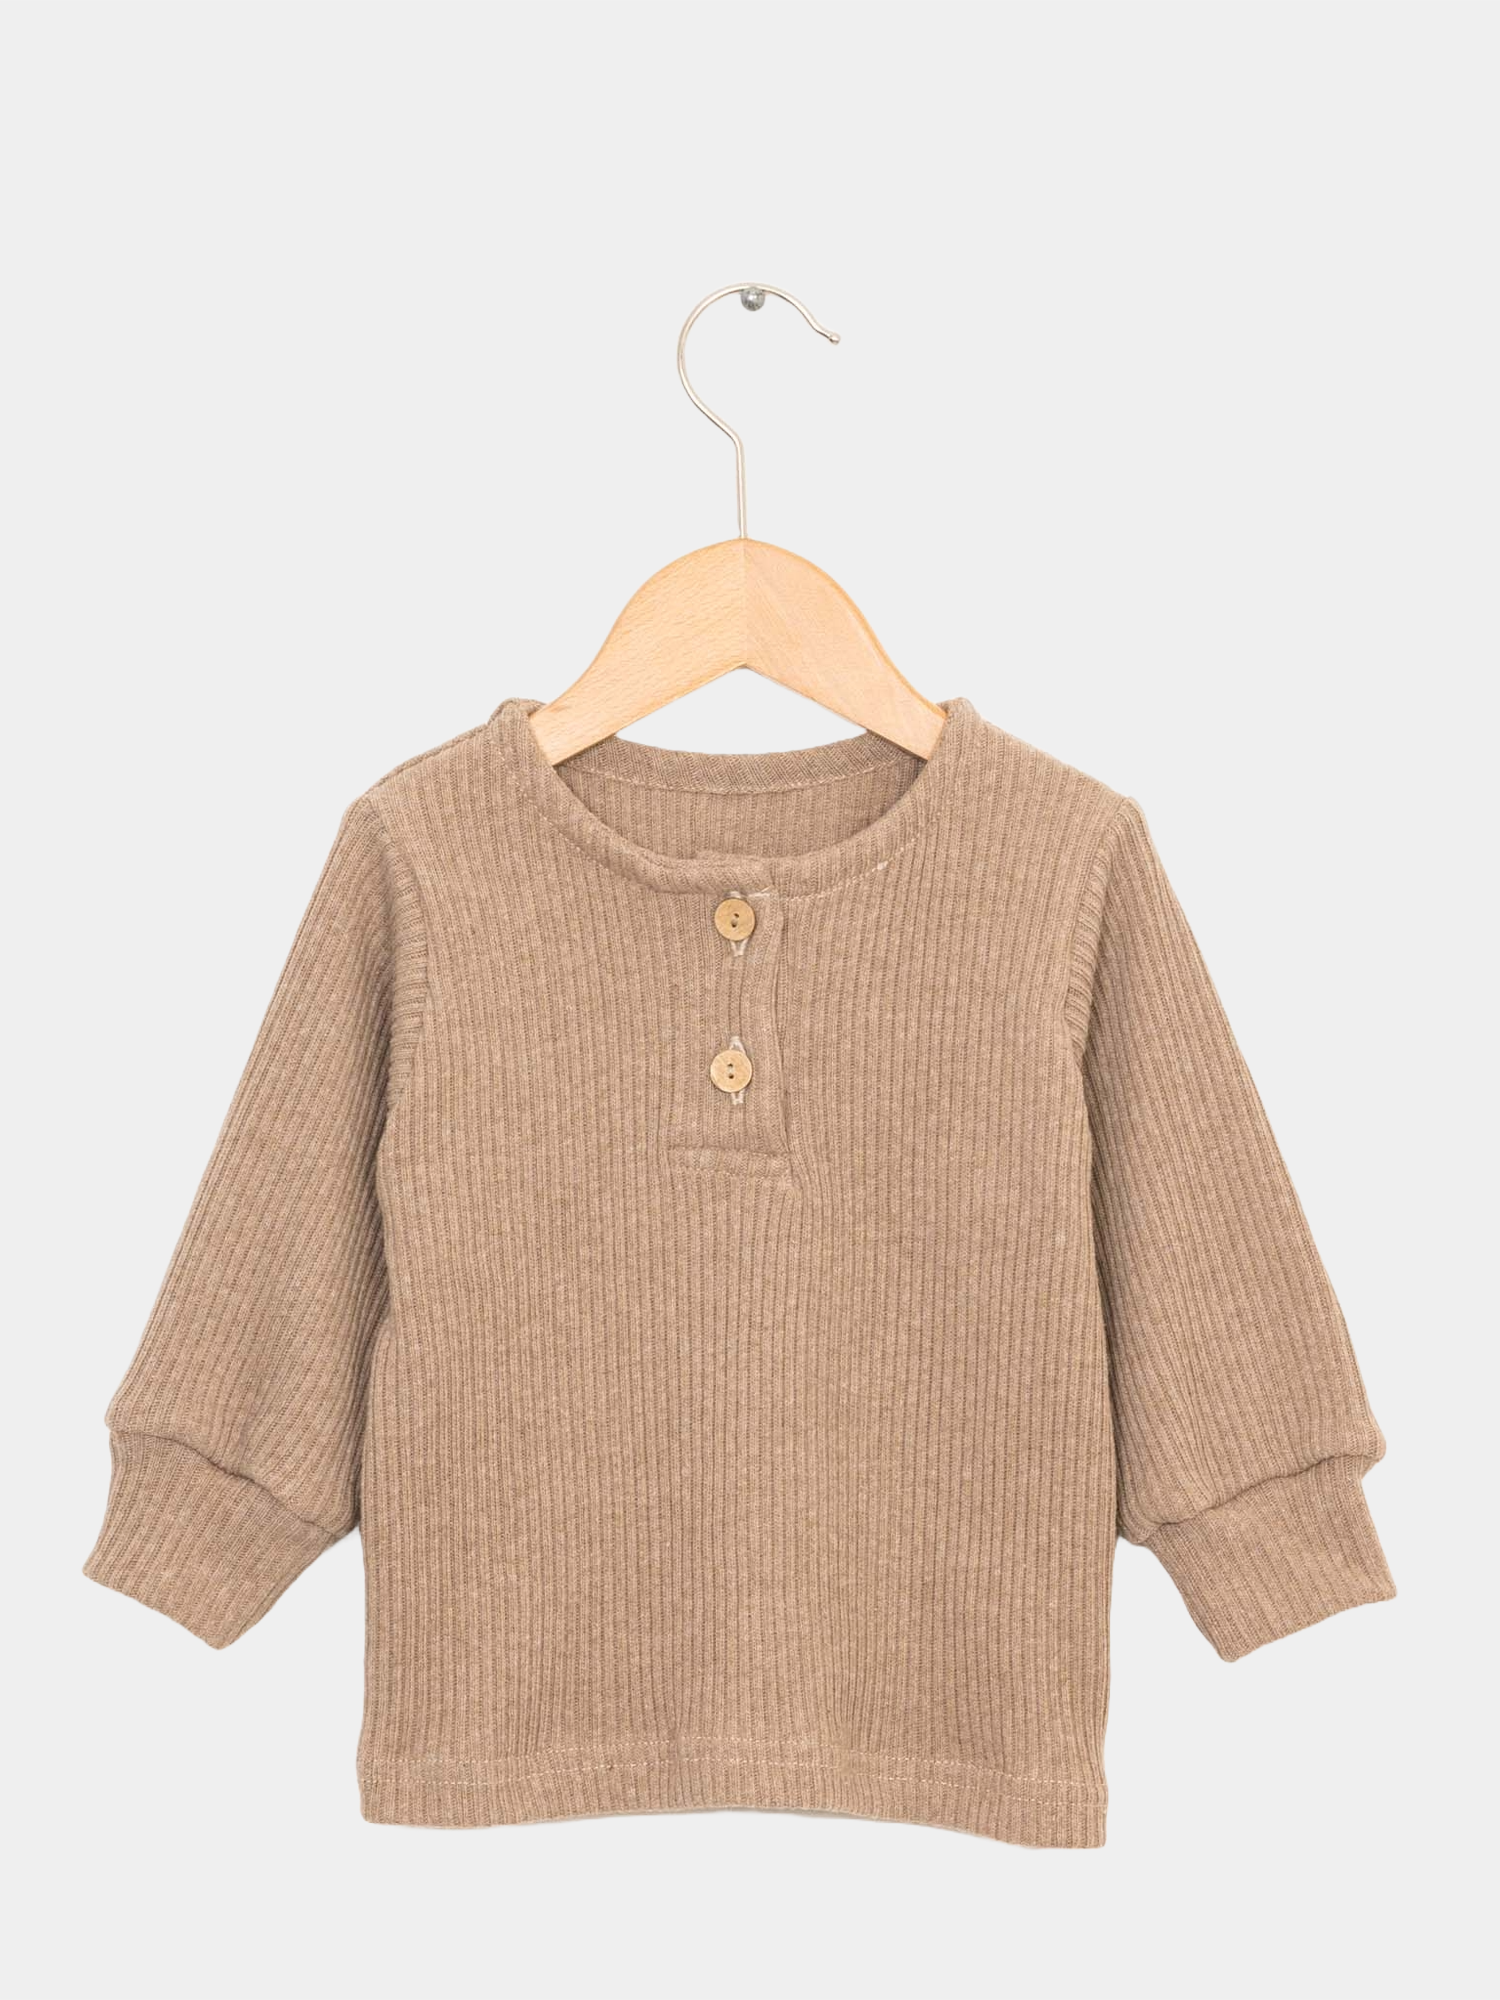 Ribbed knit shirt - Oats